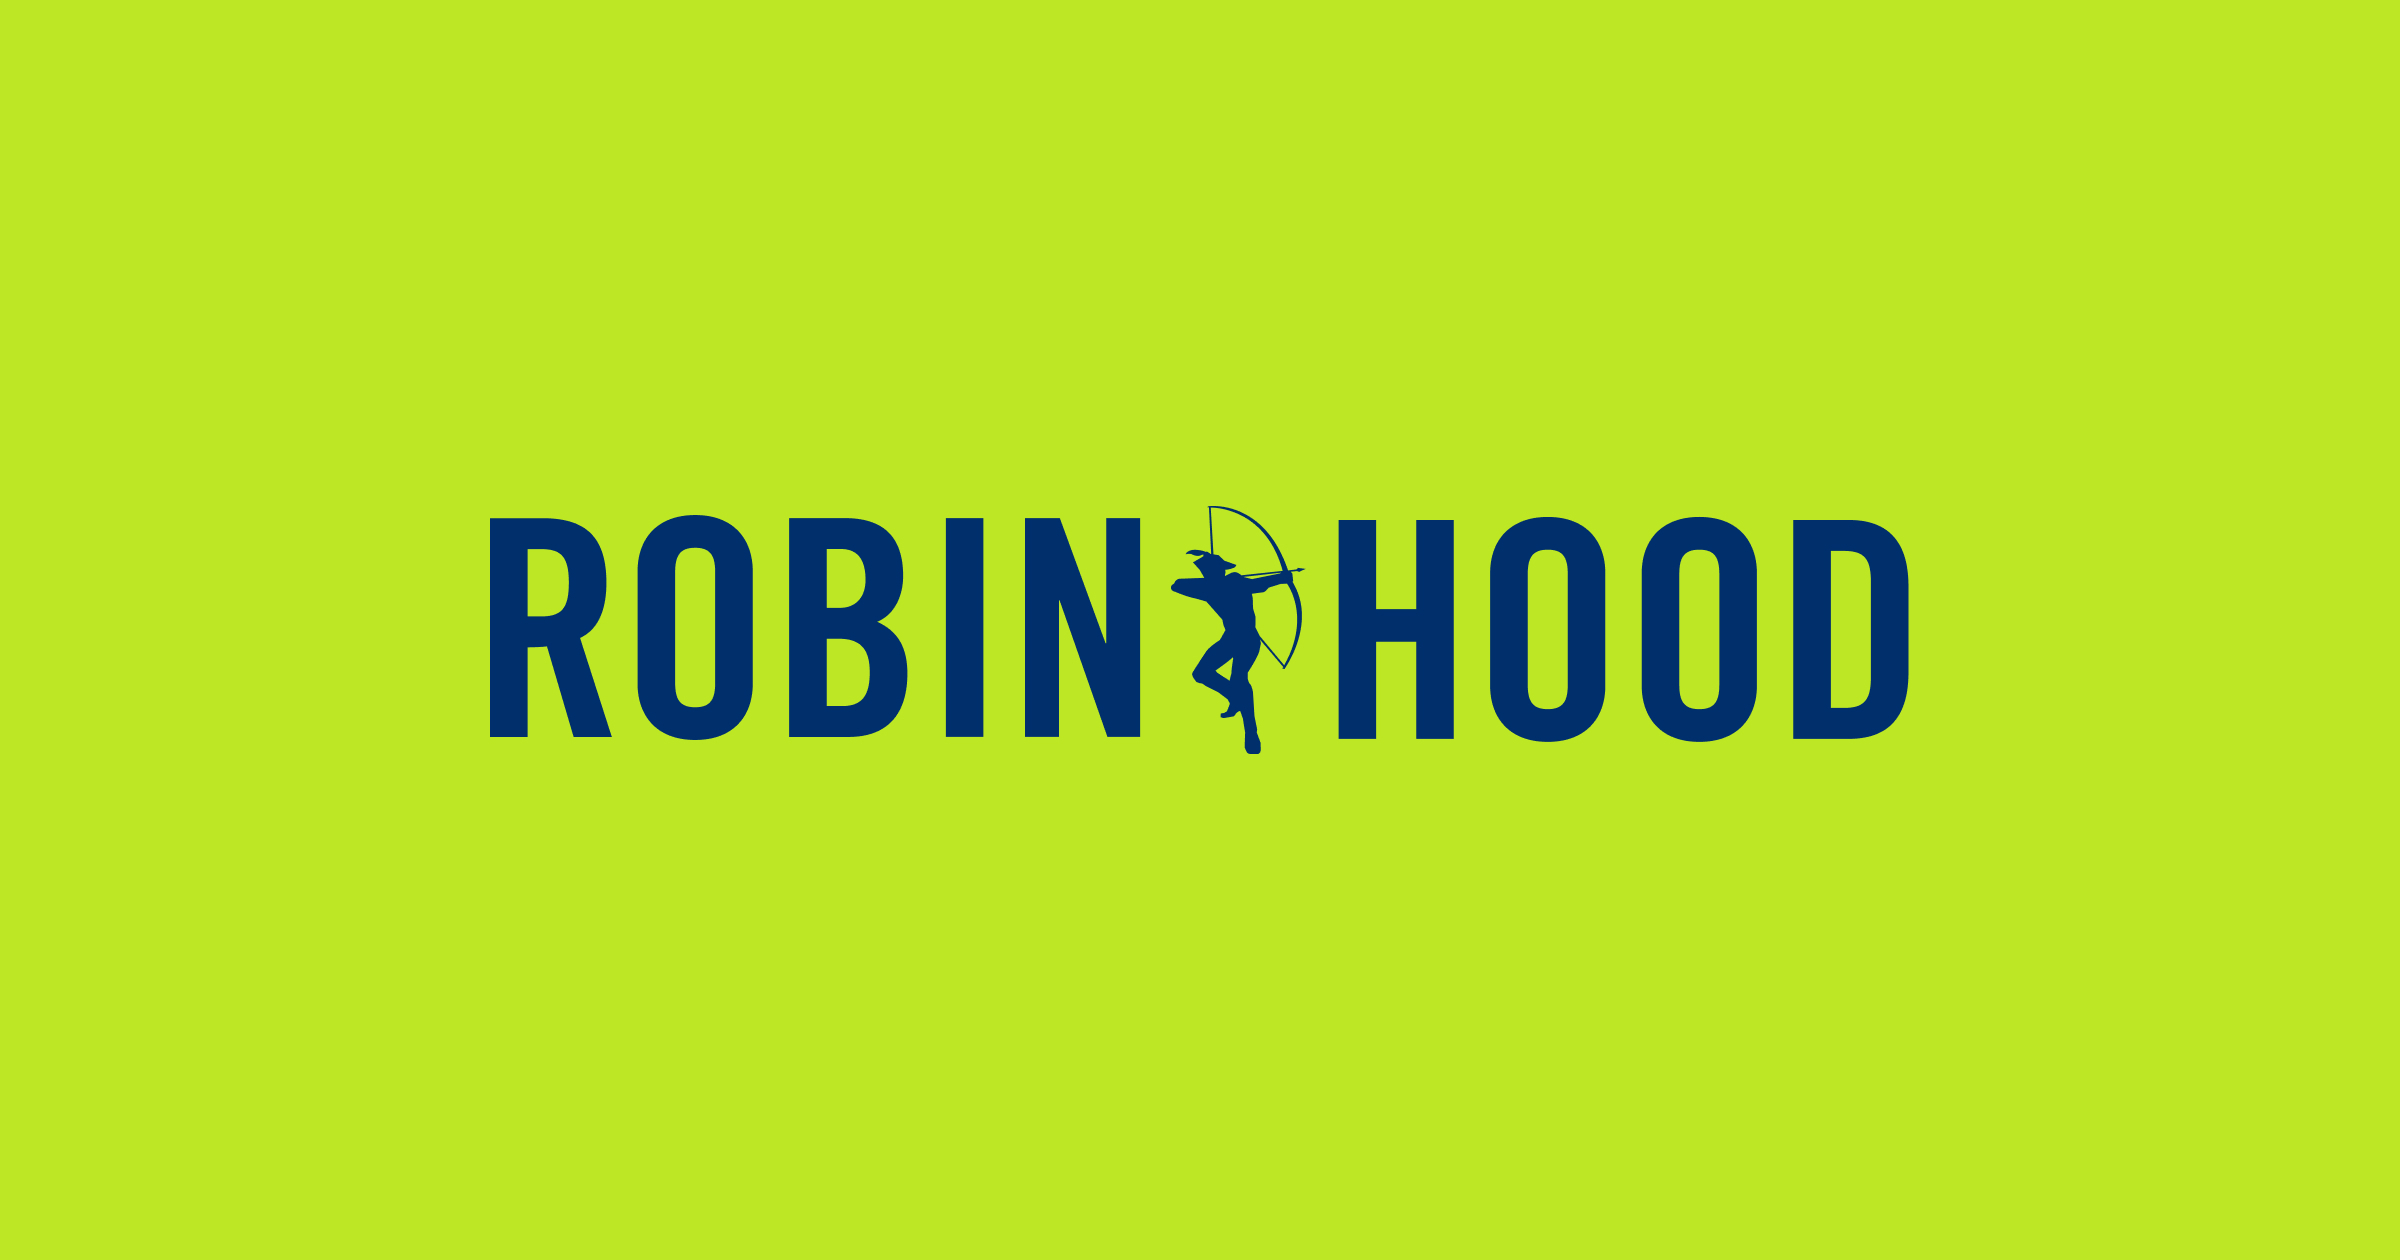 (c) Robinhood.org